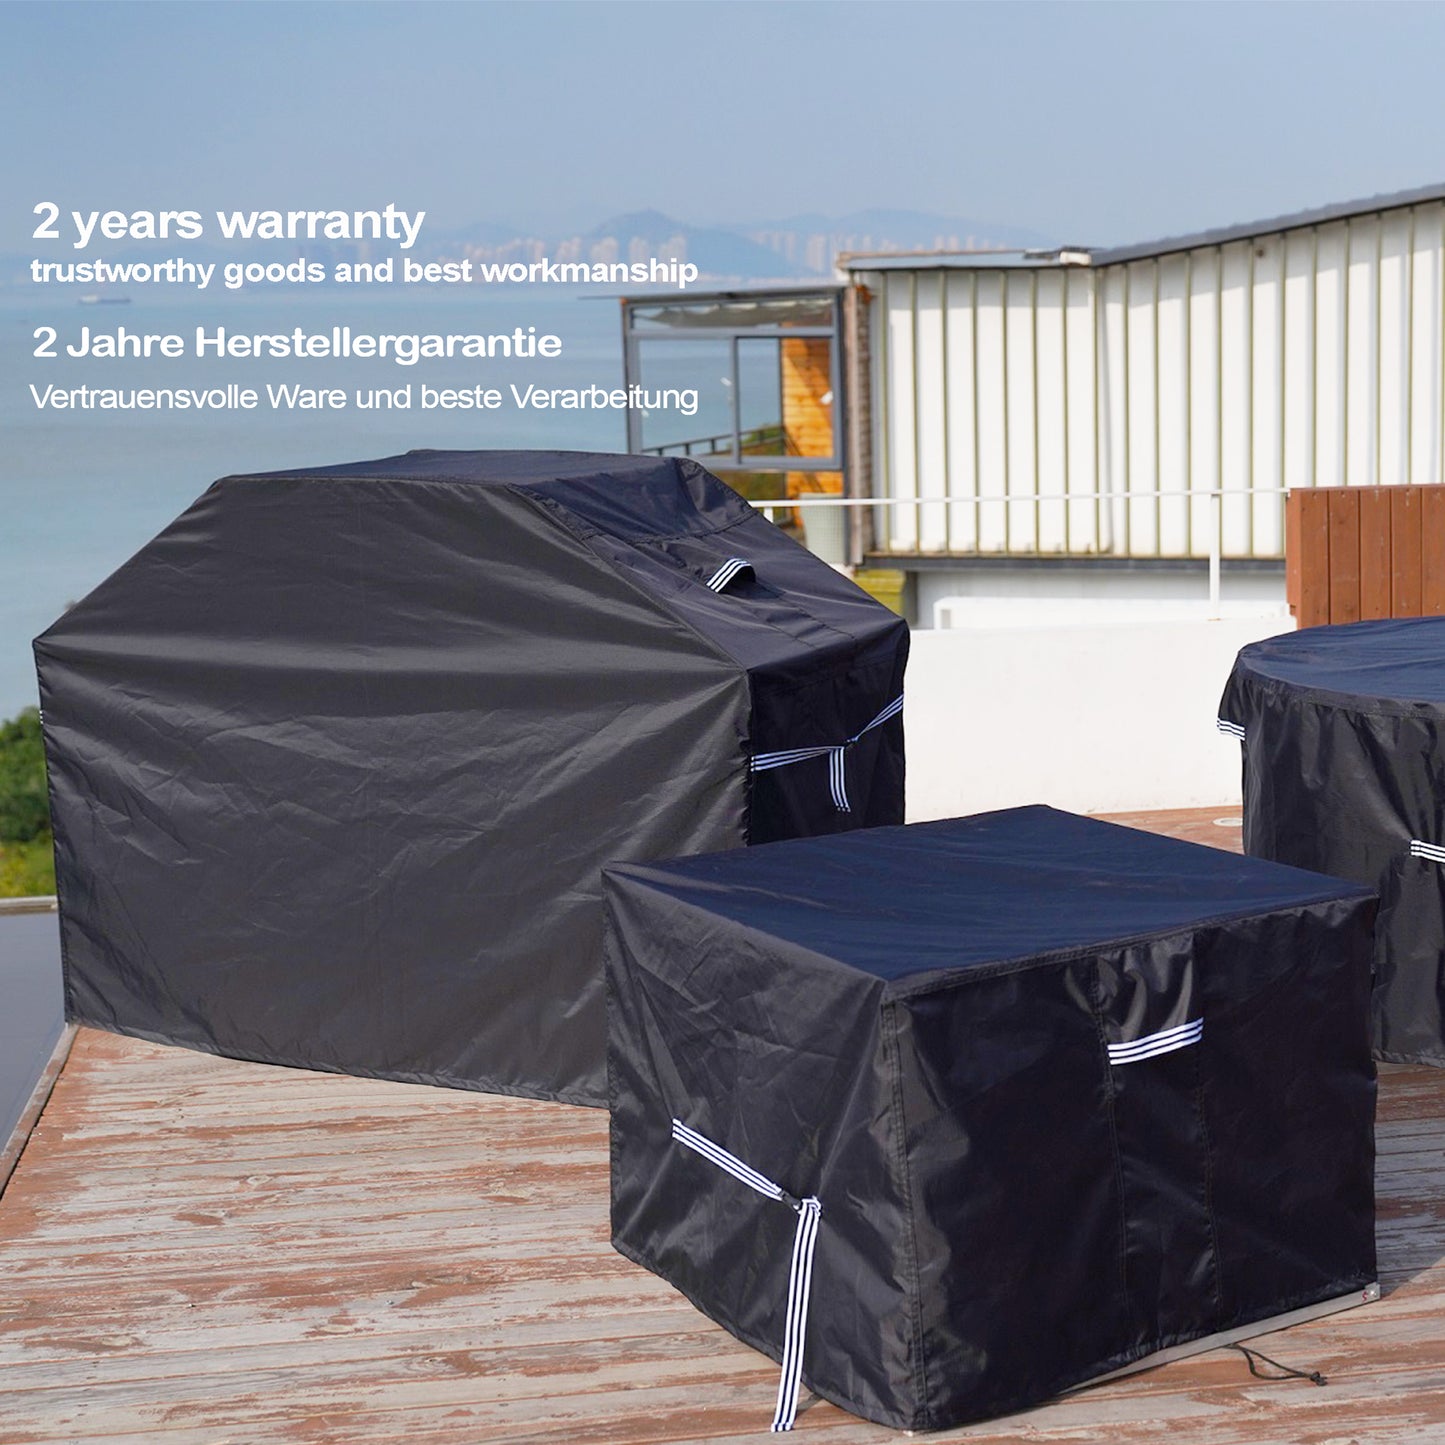 Black Premium Gartensitzgruppenhülle Ø  200x85cm / garden dining set cover /  atmungsaktiv / breathable